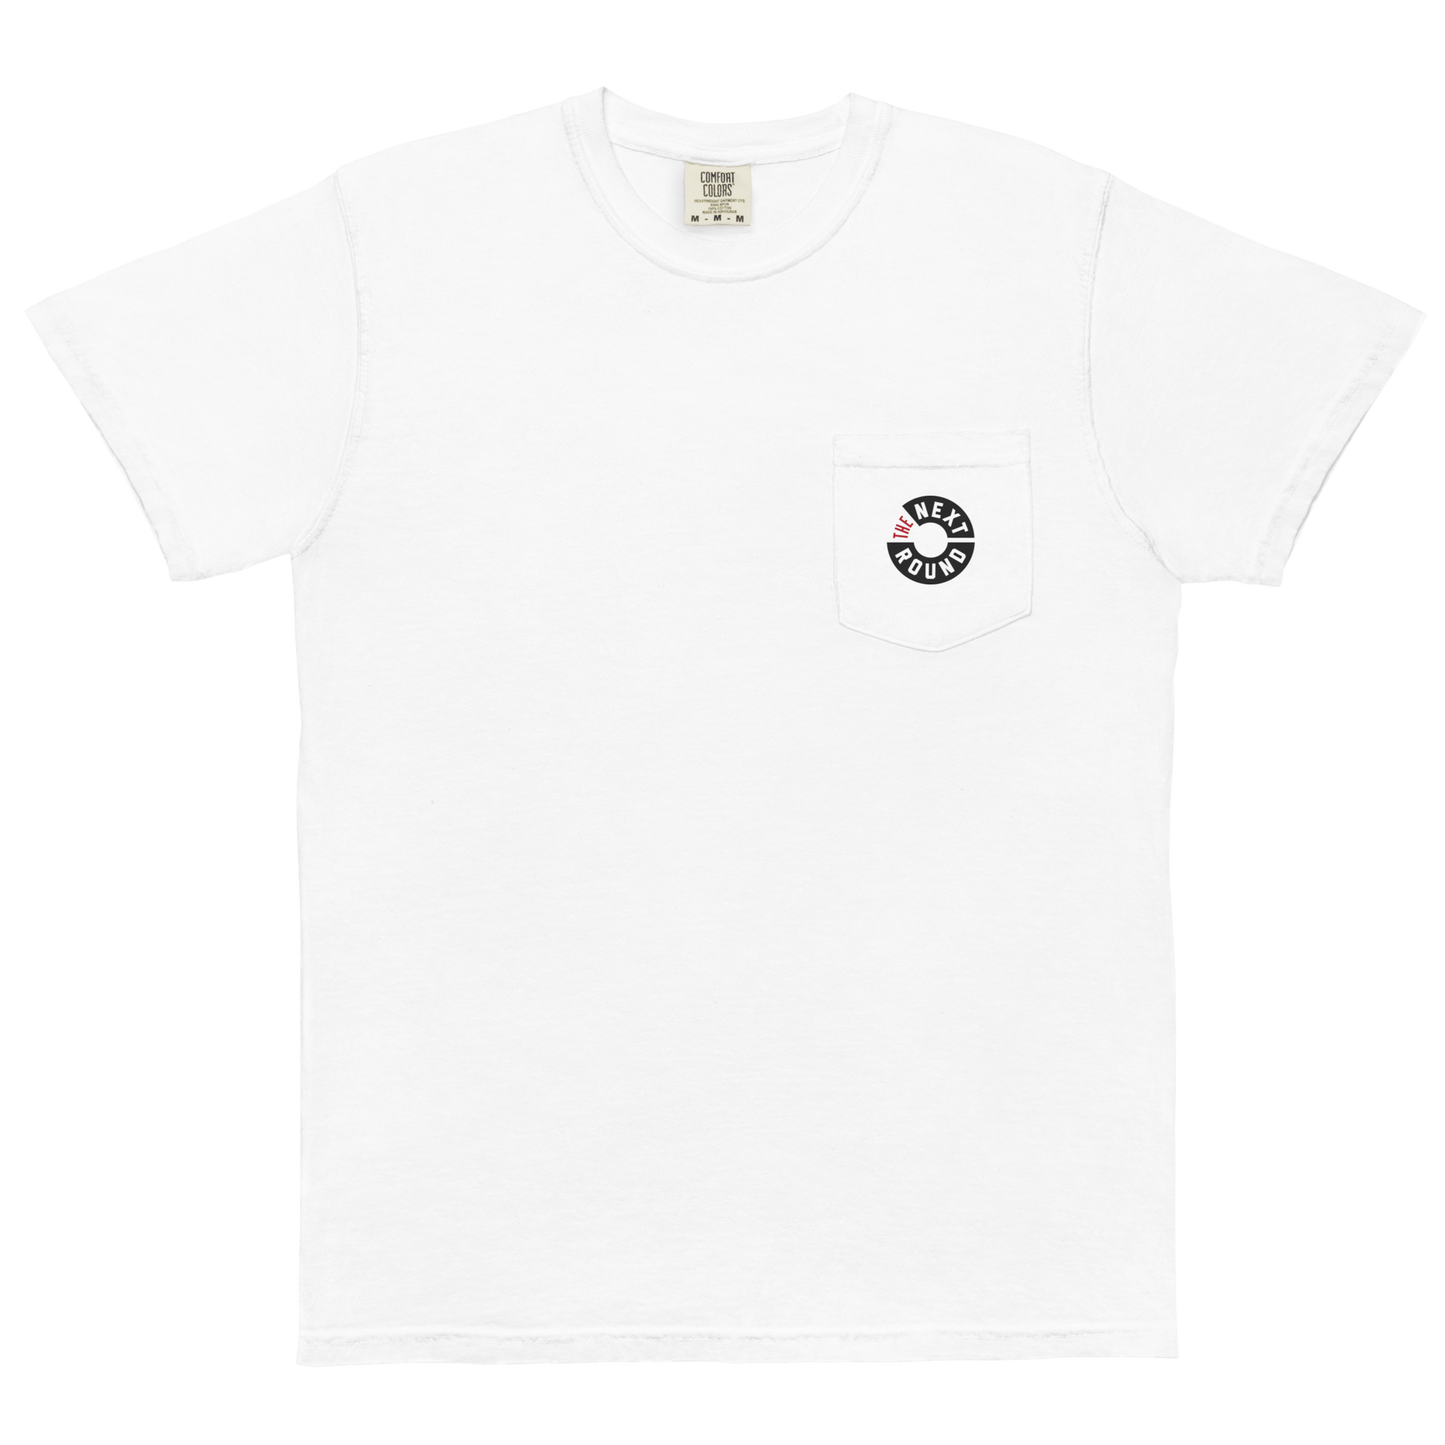 The Next Round Pocket Shirt (White w/ Back)